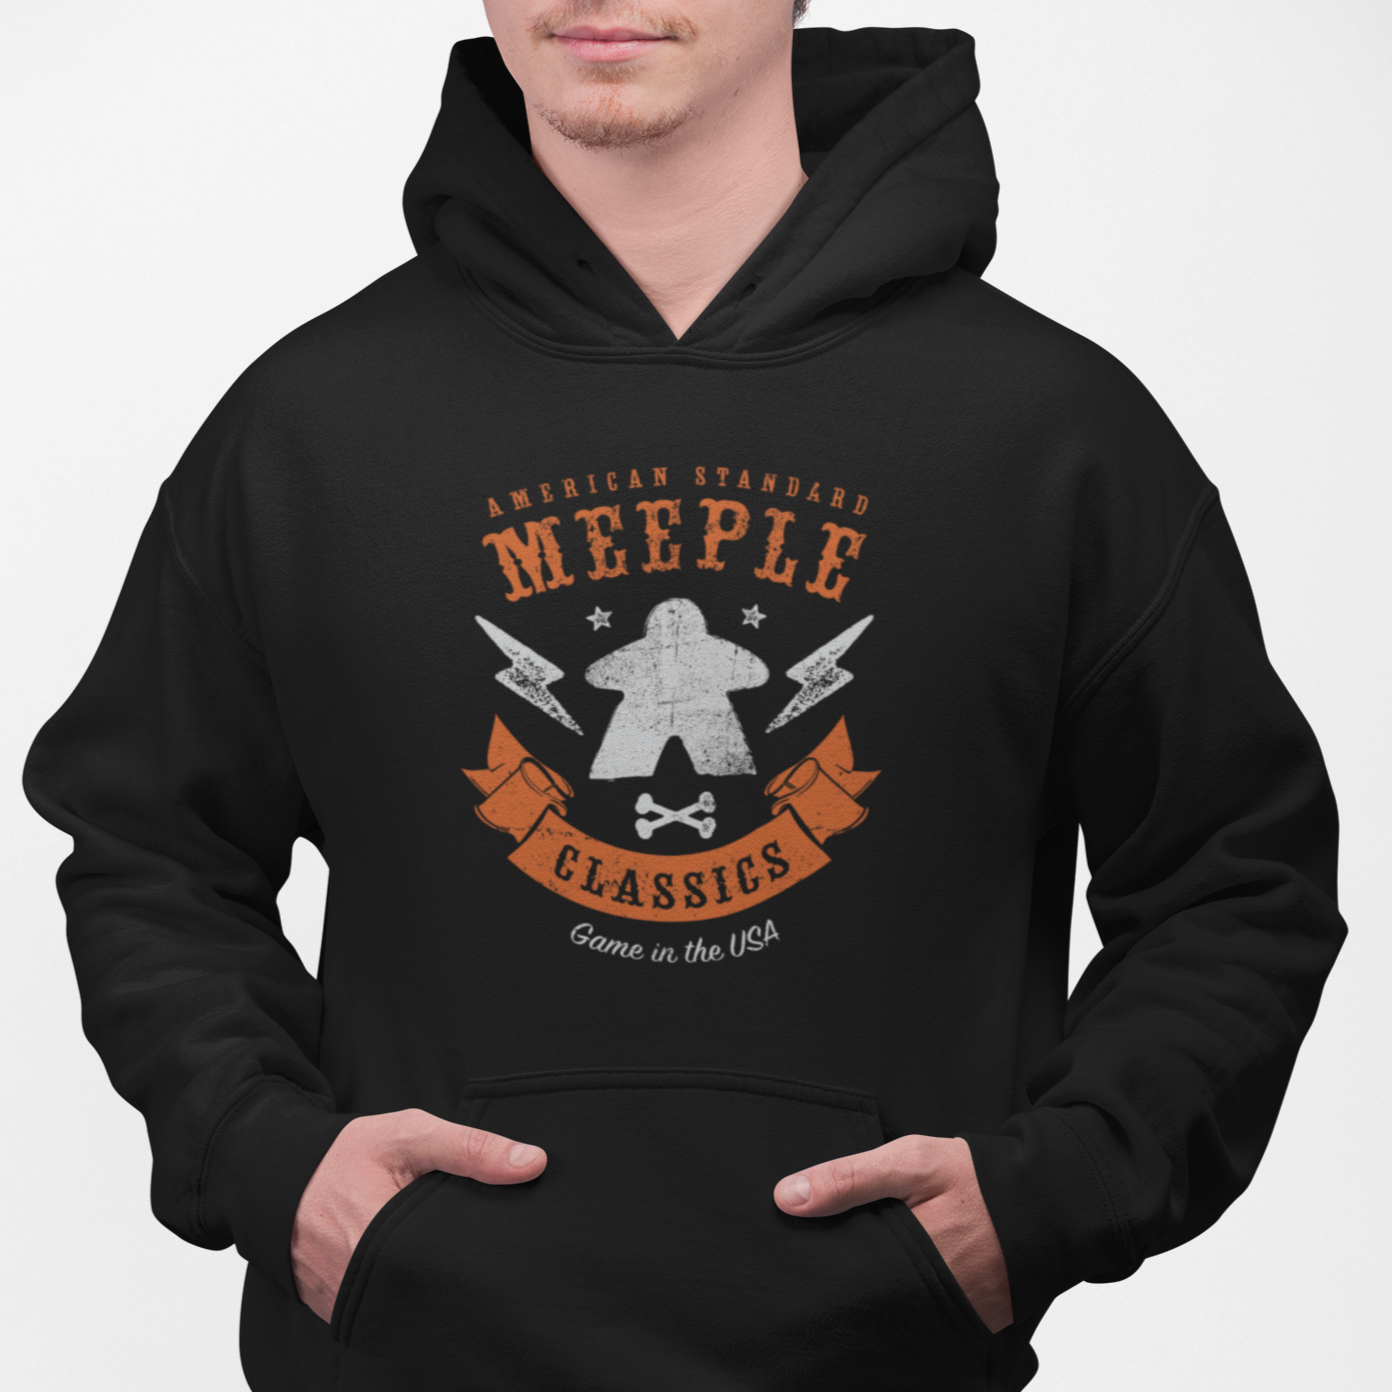 American Meeple Classics Pullover Hoodie